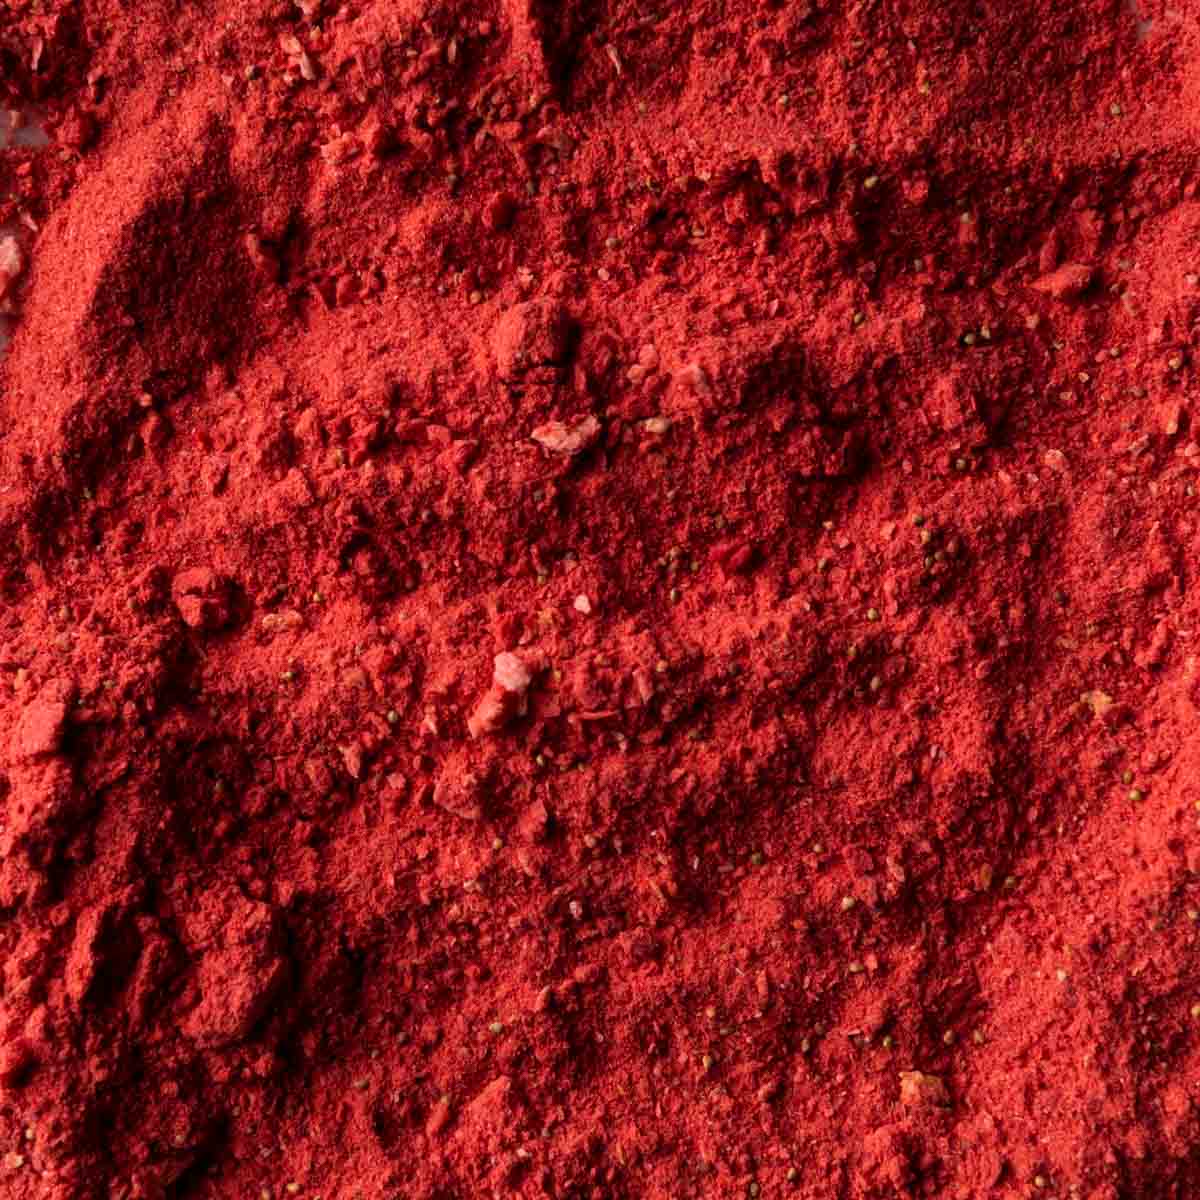 A macro shot of freeze dried strawberry powder